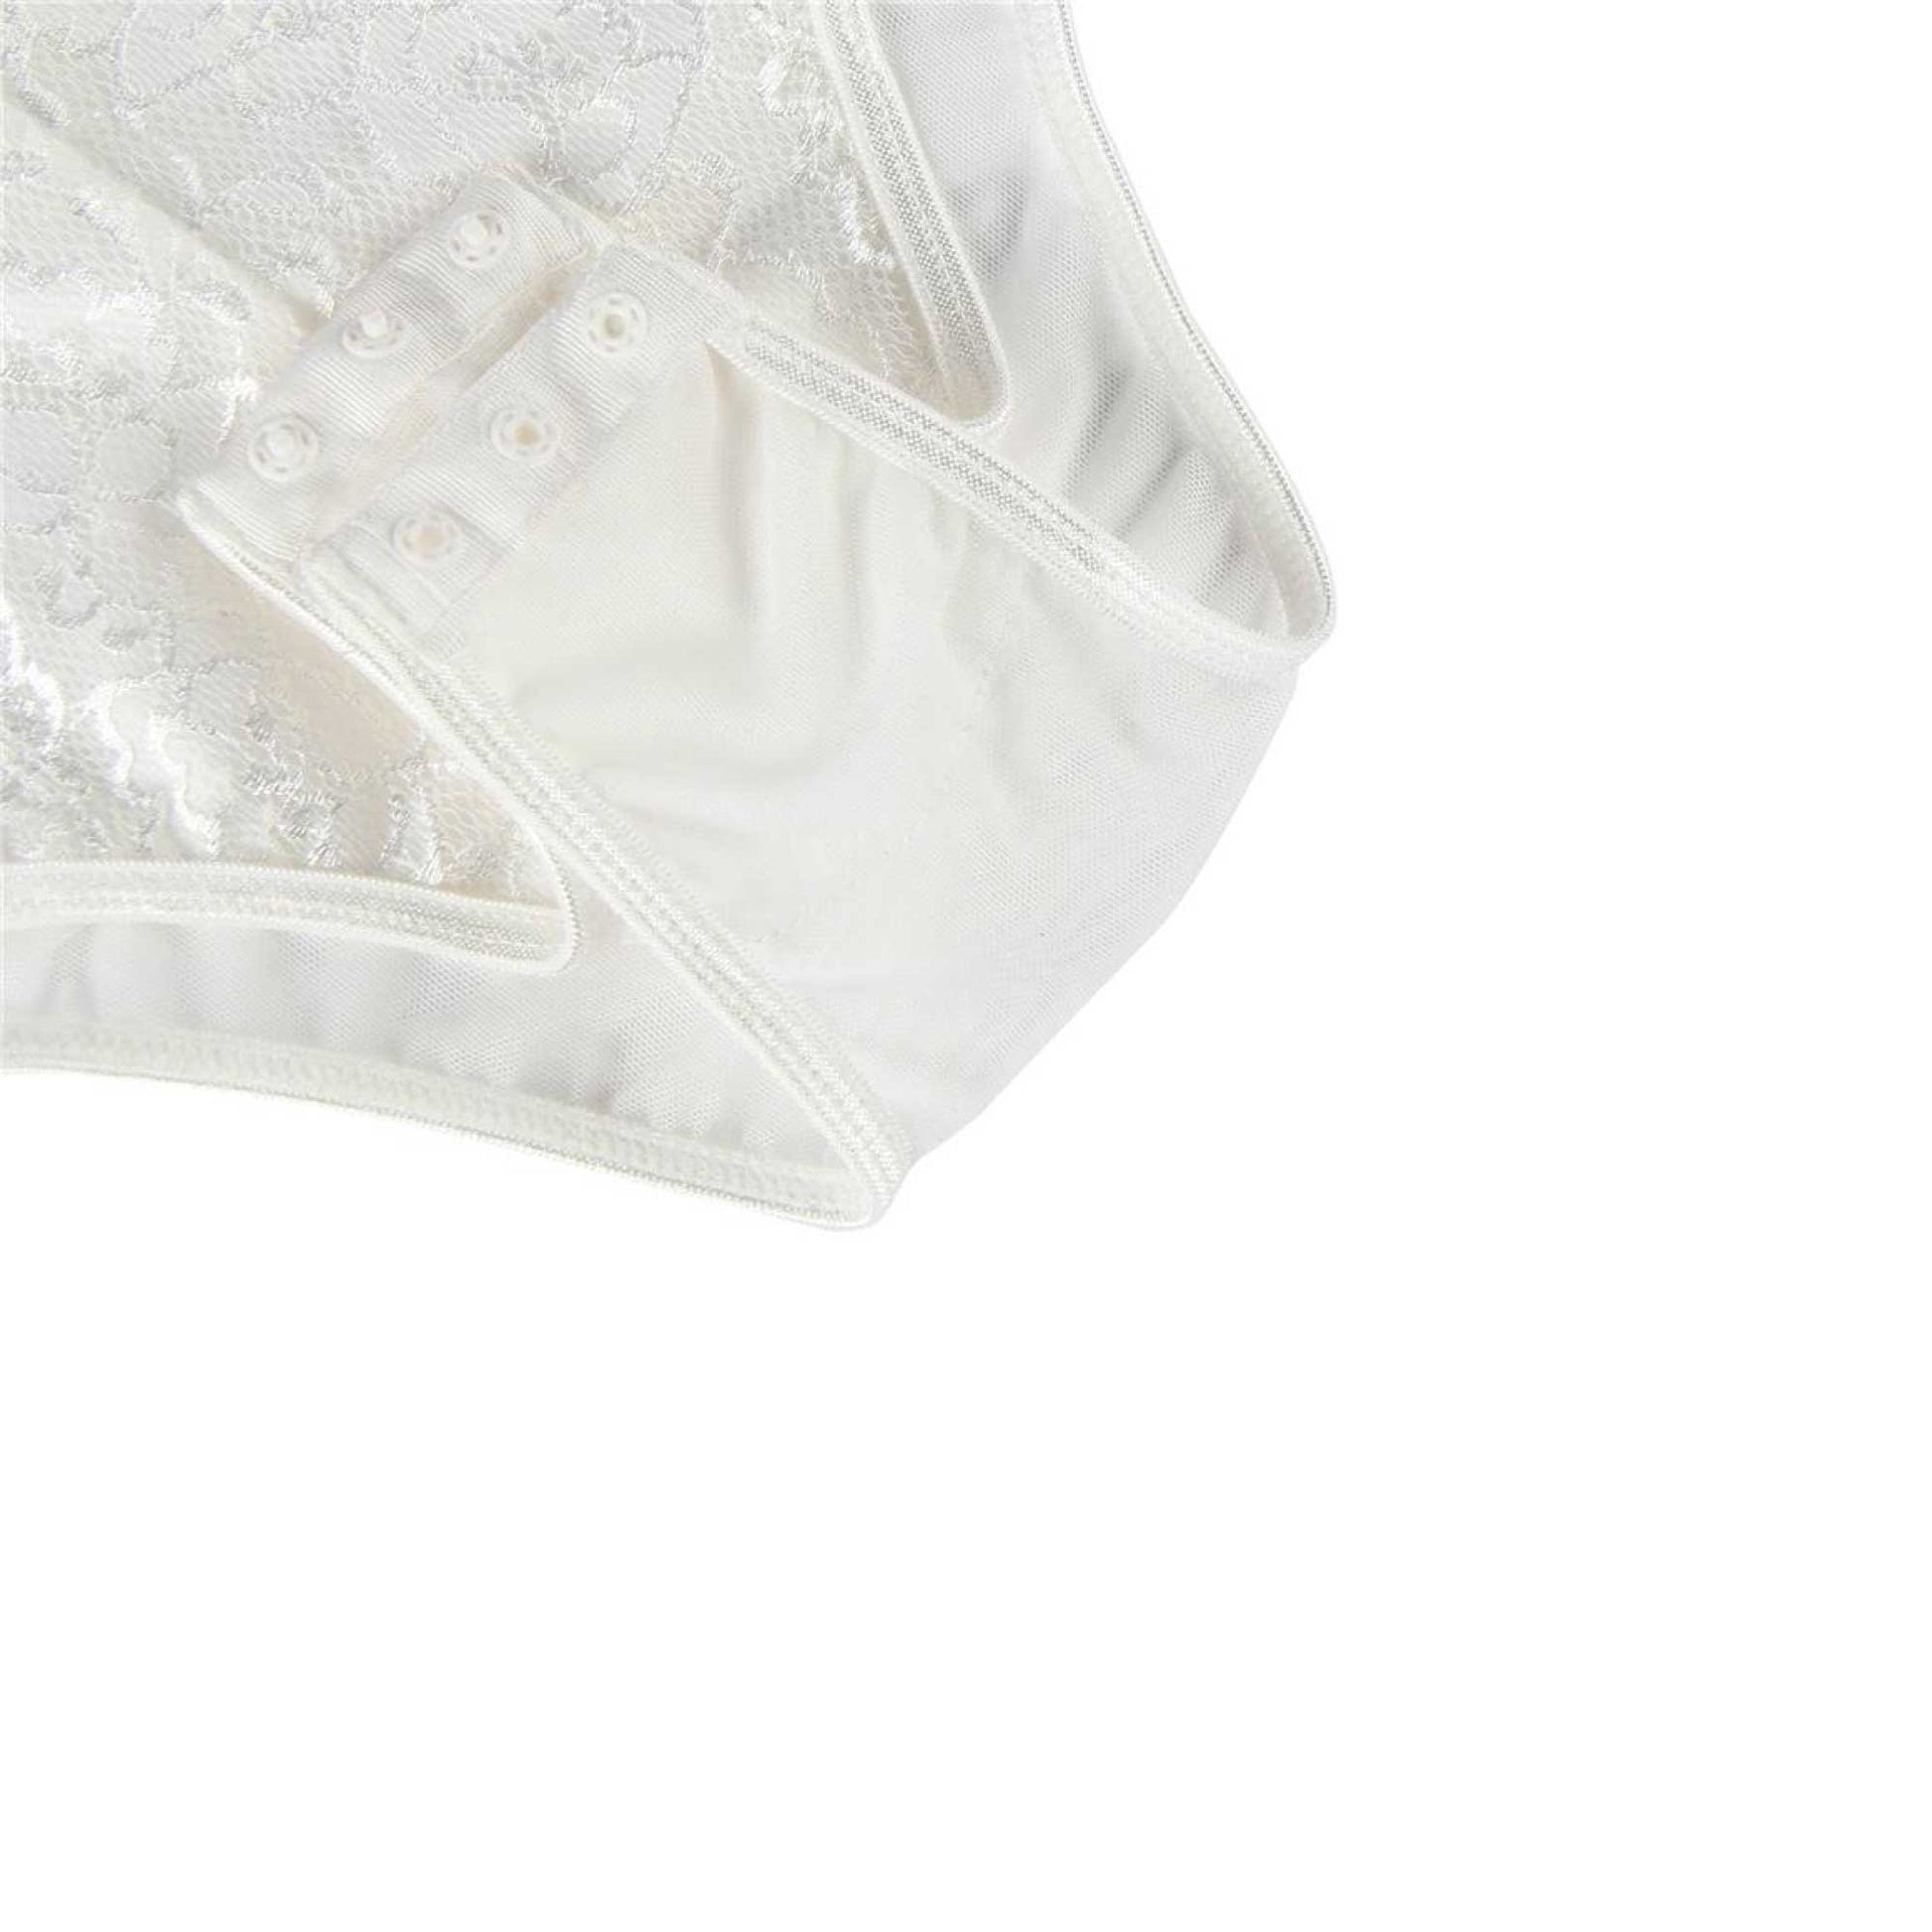 White Eyelash Lace Teddy Bodysuit Sexy One Piece Floral Caged Strappy Underwear